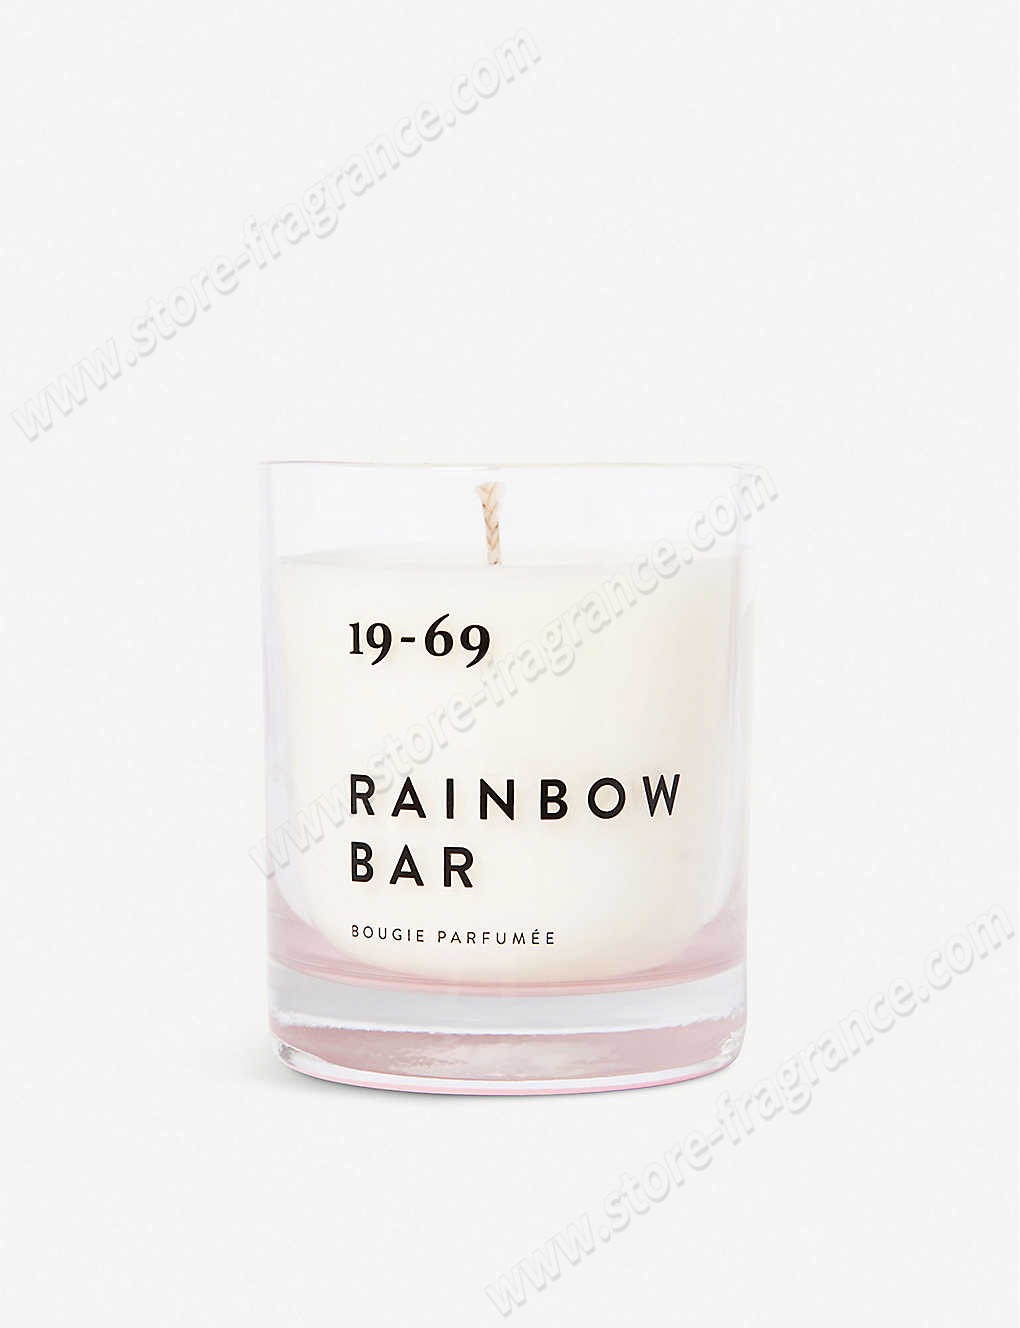 19-69/Rainbow Bar Candle 200ml ✿ Discount Store - 19-69/Rainbow Bar Candle 200ml ✿ Discount Store